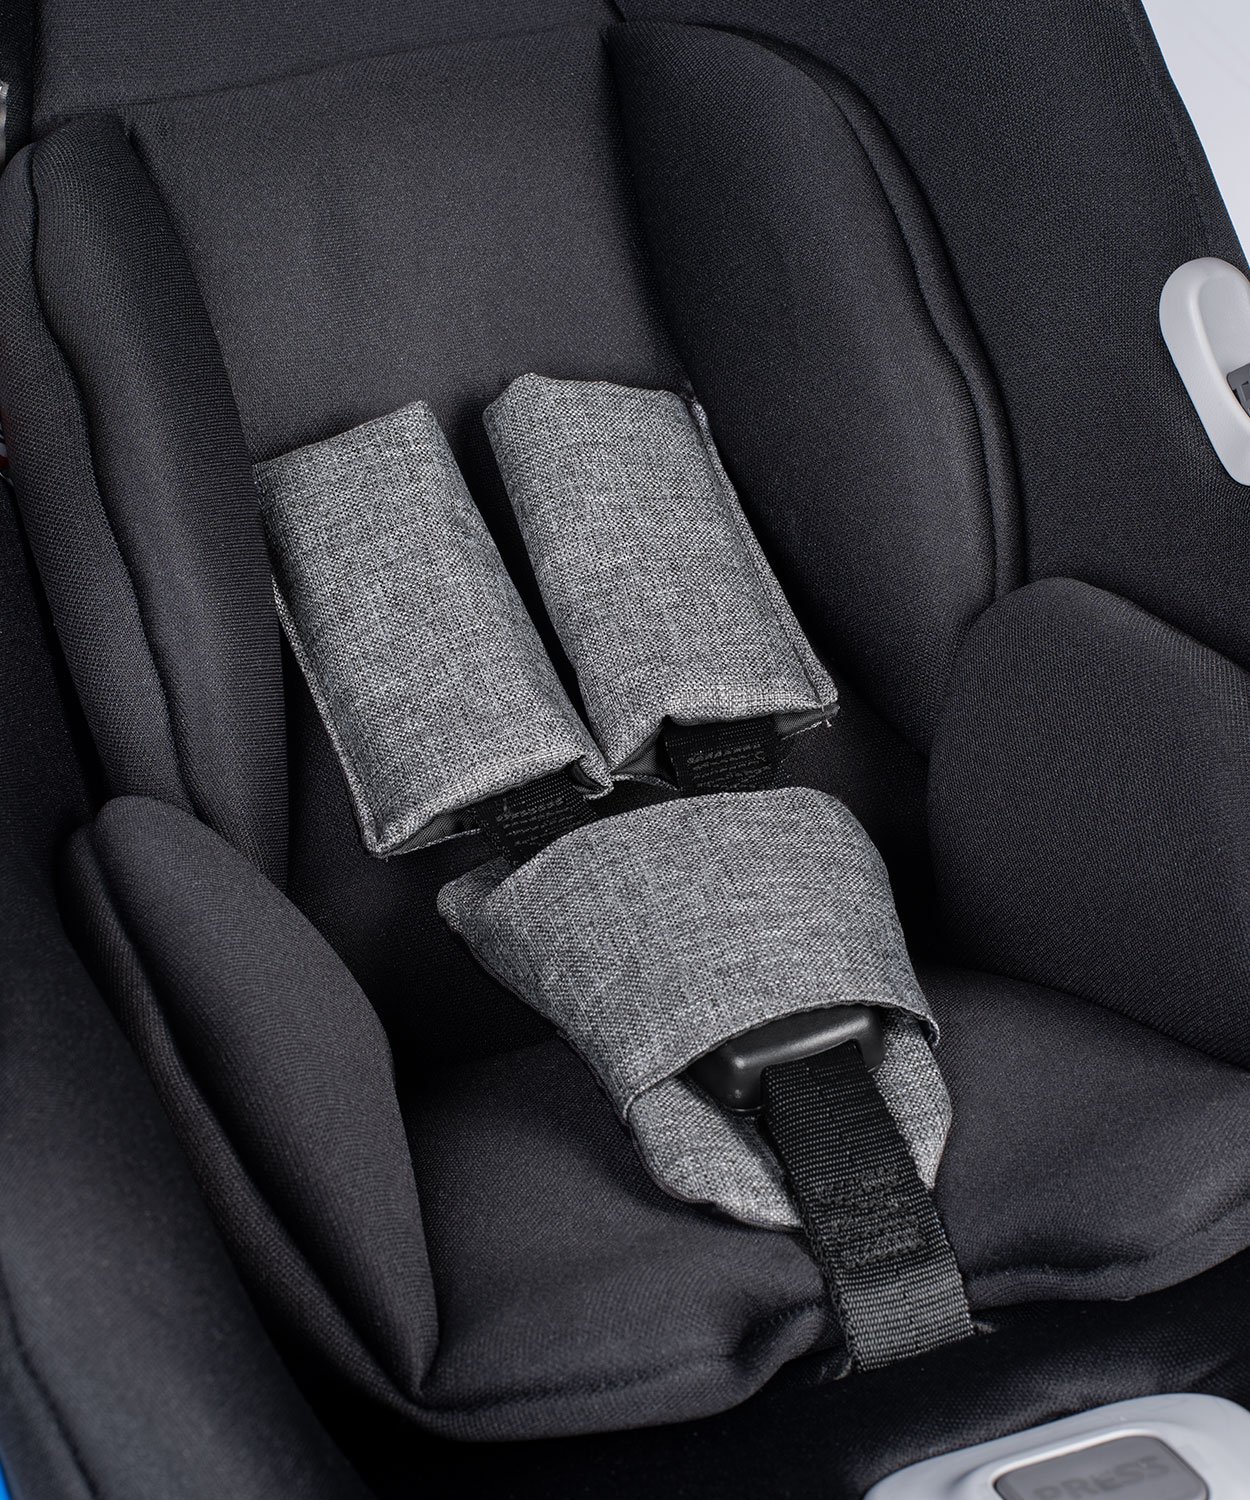 Venicci Car Seat Denim Grey, How To Install Venicci Baby Car Seat With Seatbelt